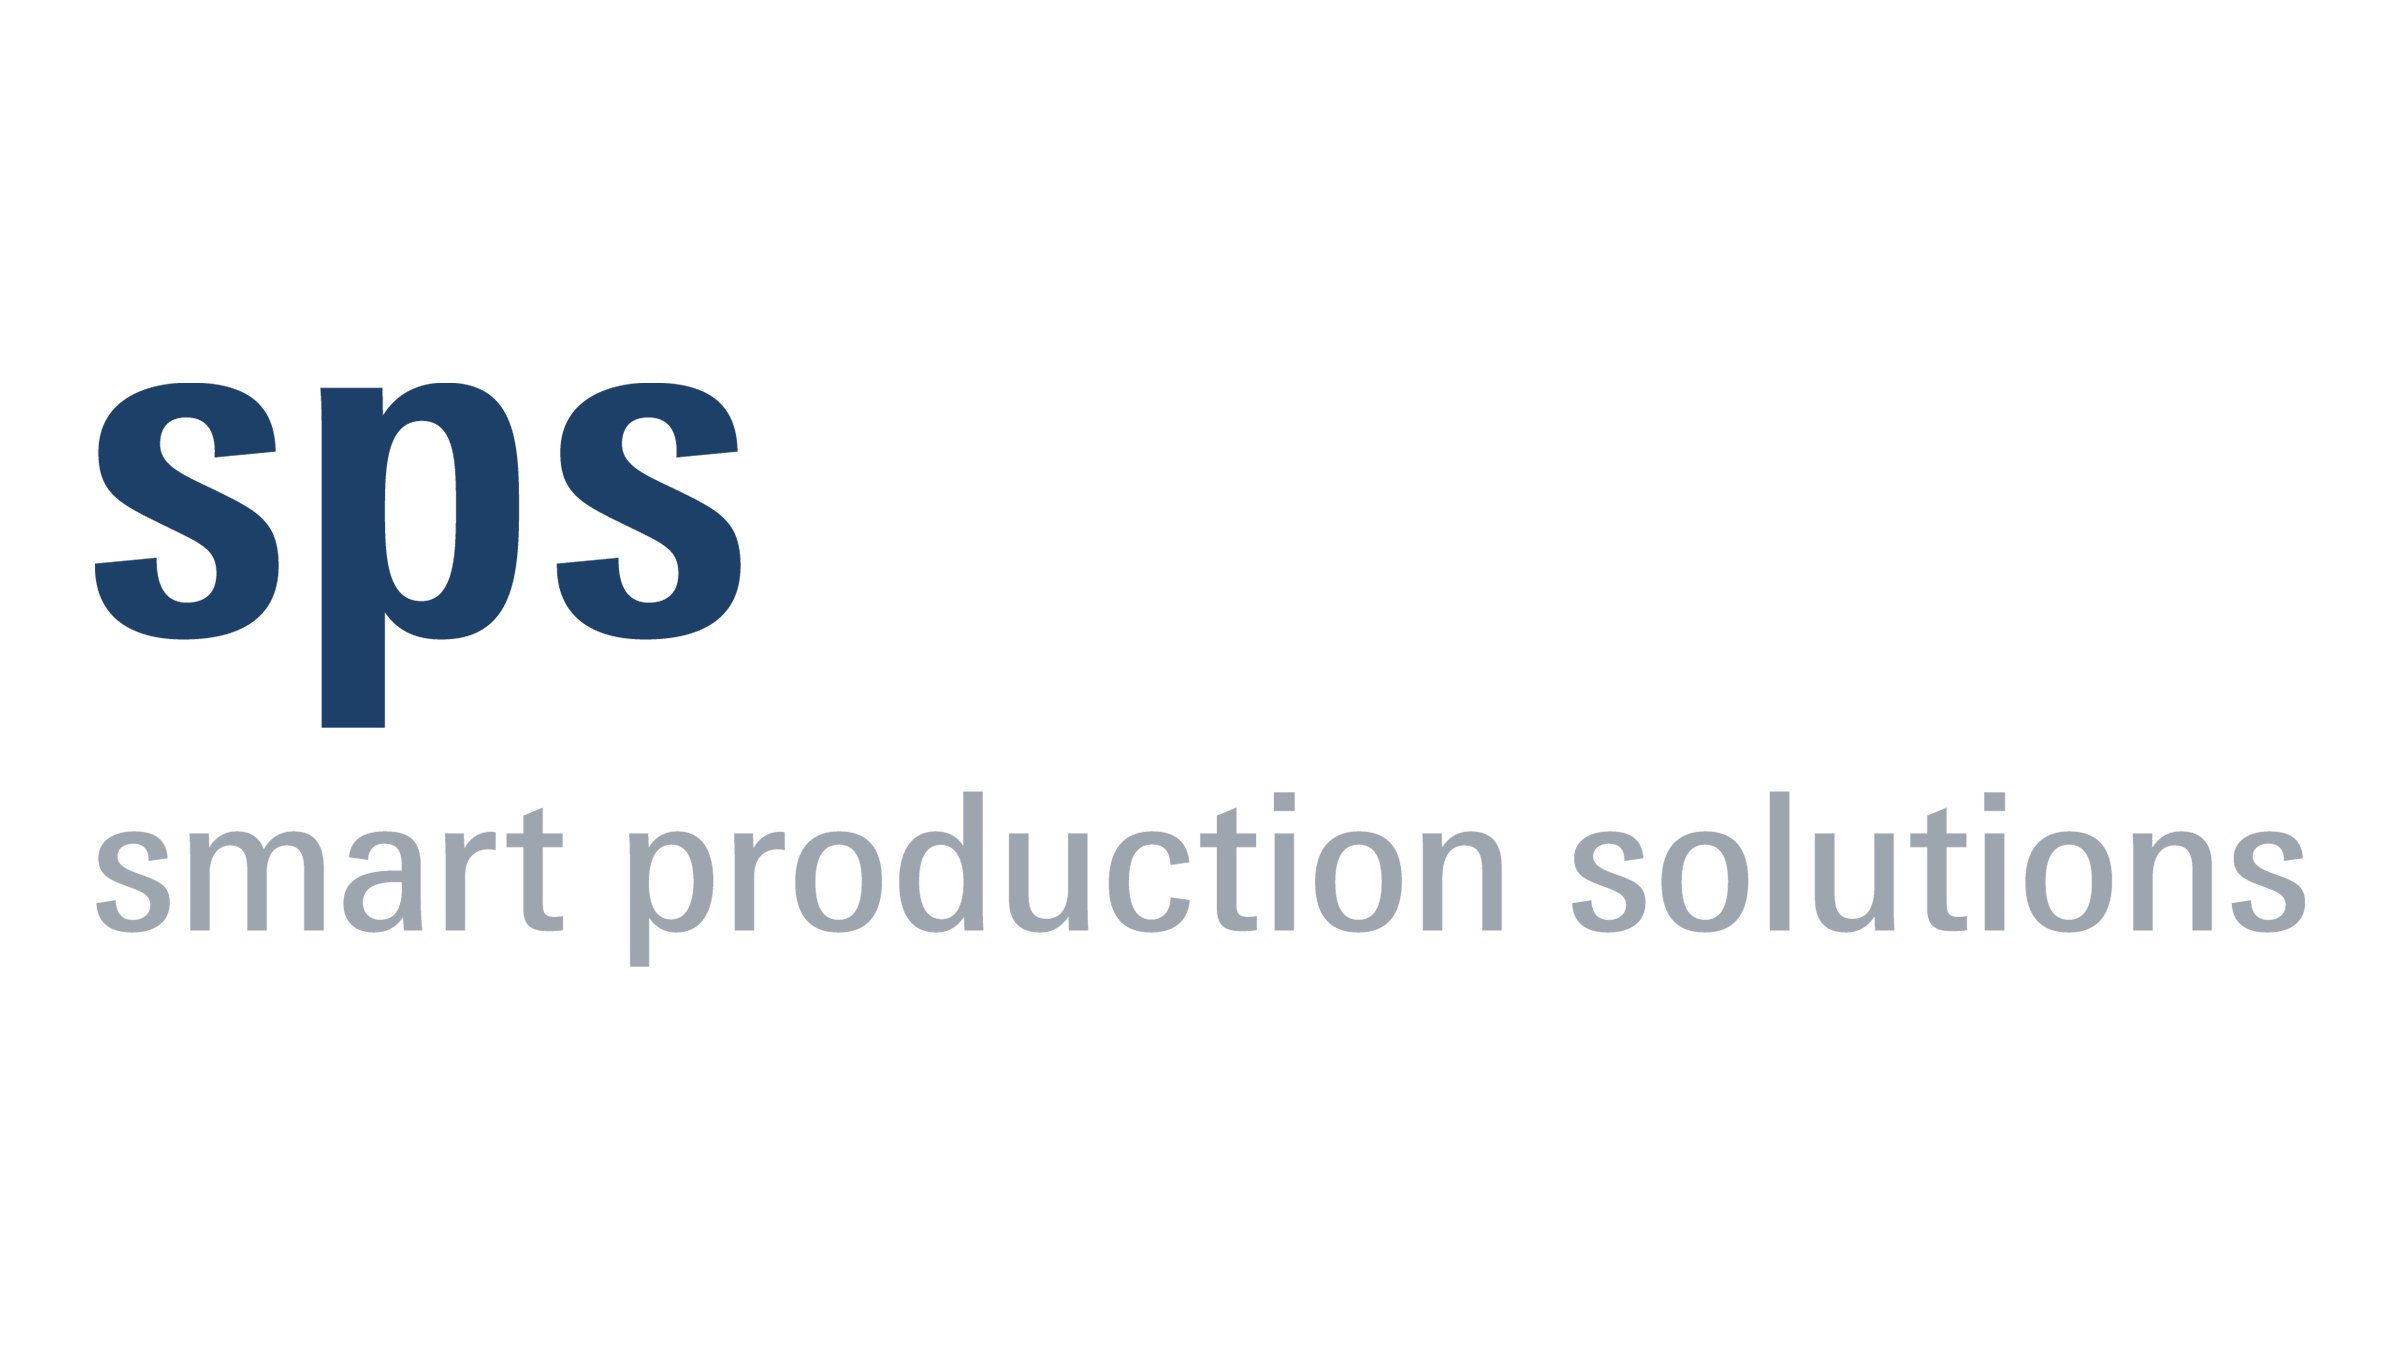 SPS smart production solutions logo